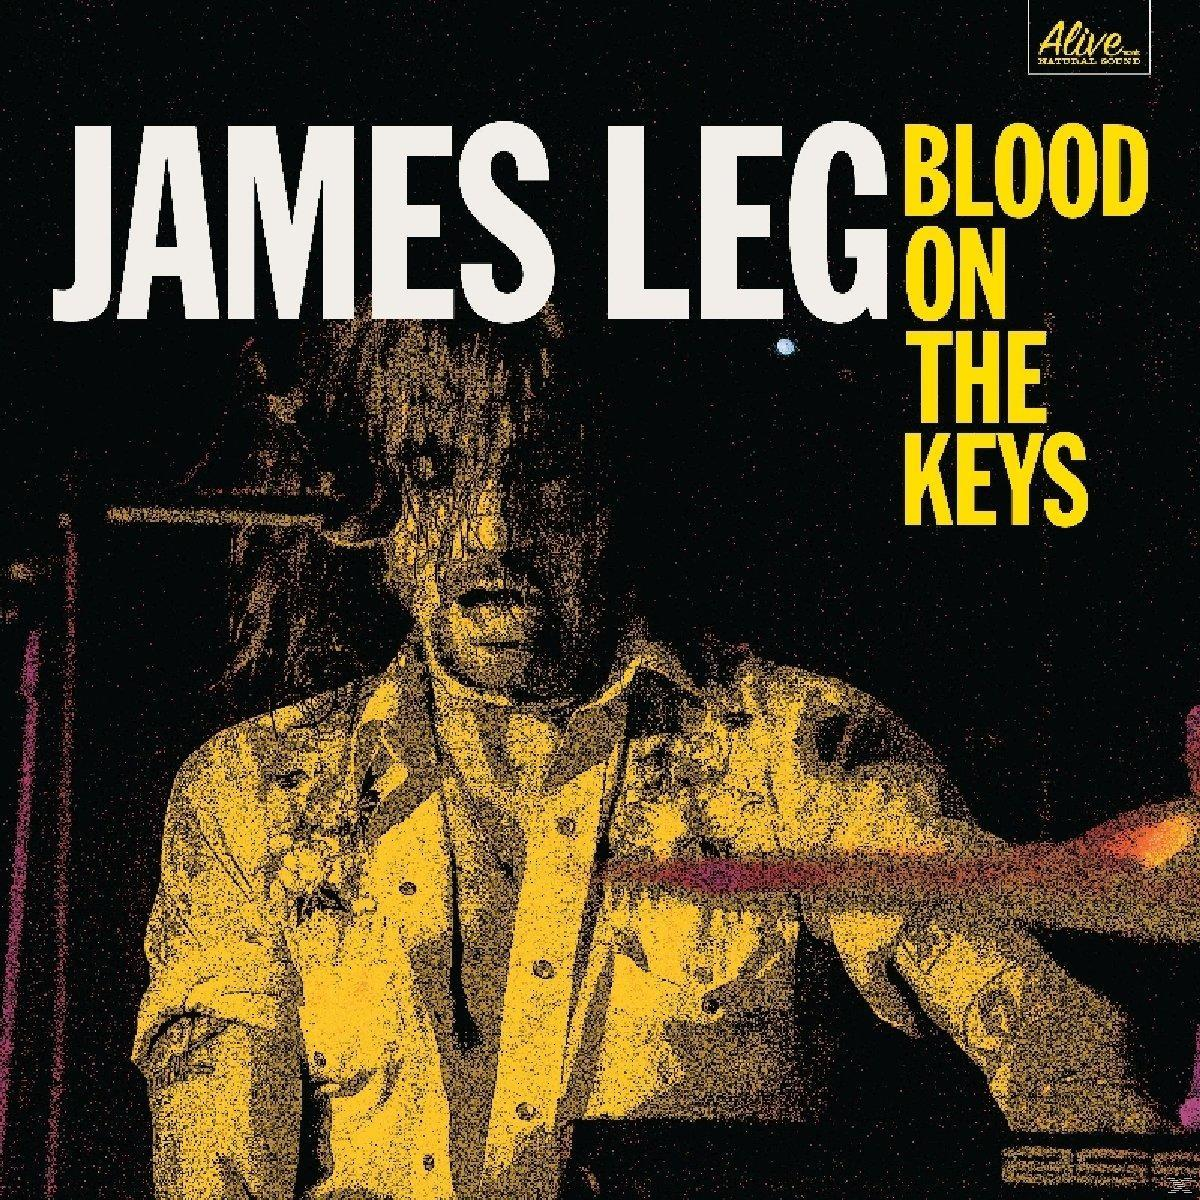 James Leg - Blood On The Keys (CD) 